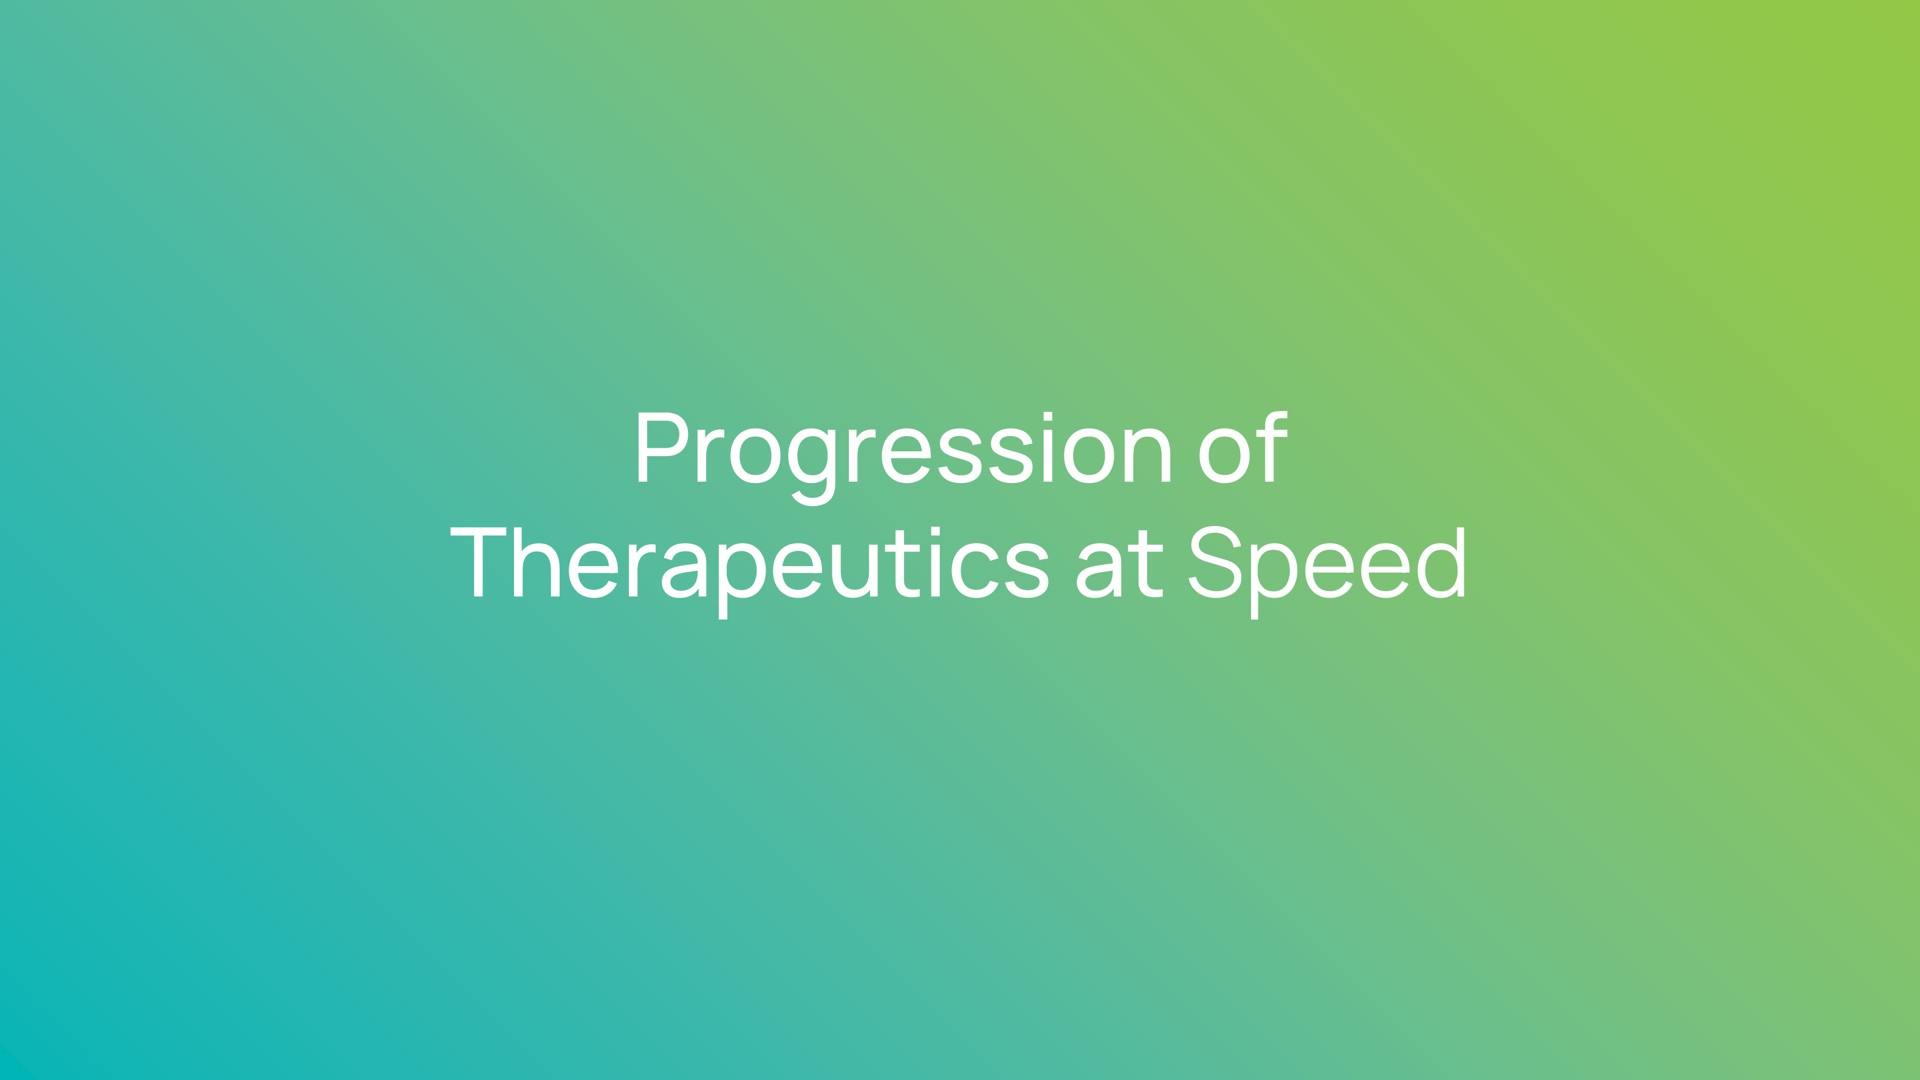 progression of therapeutics at speed | 23andMe